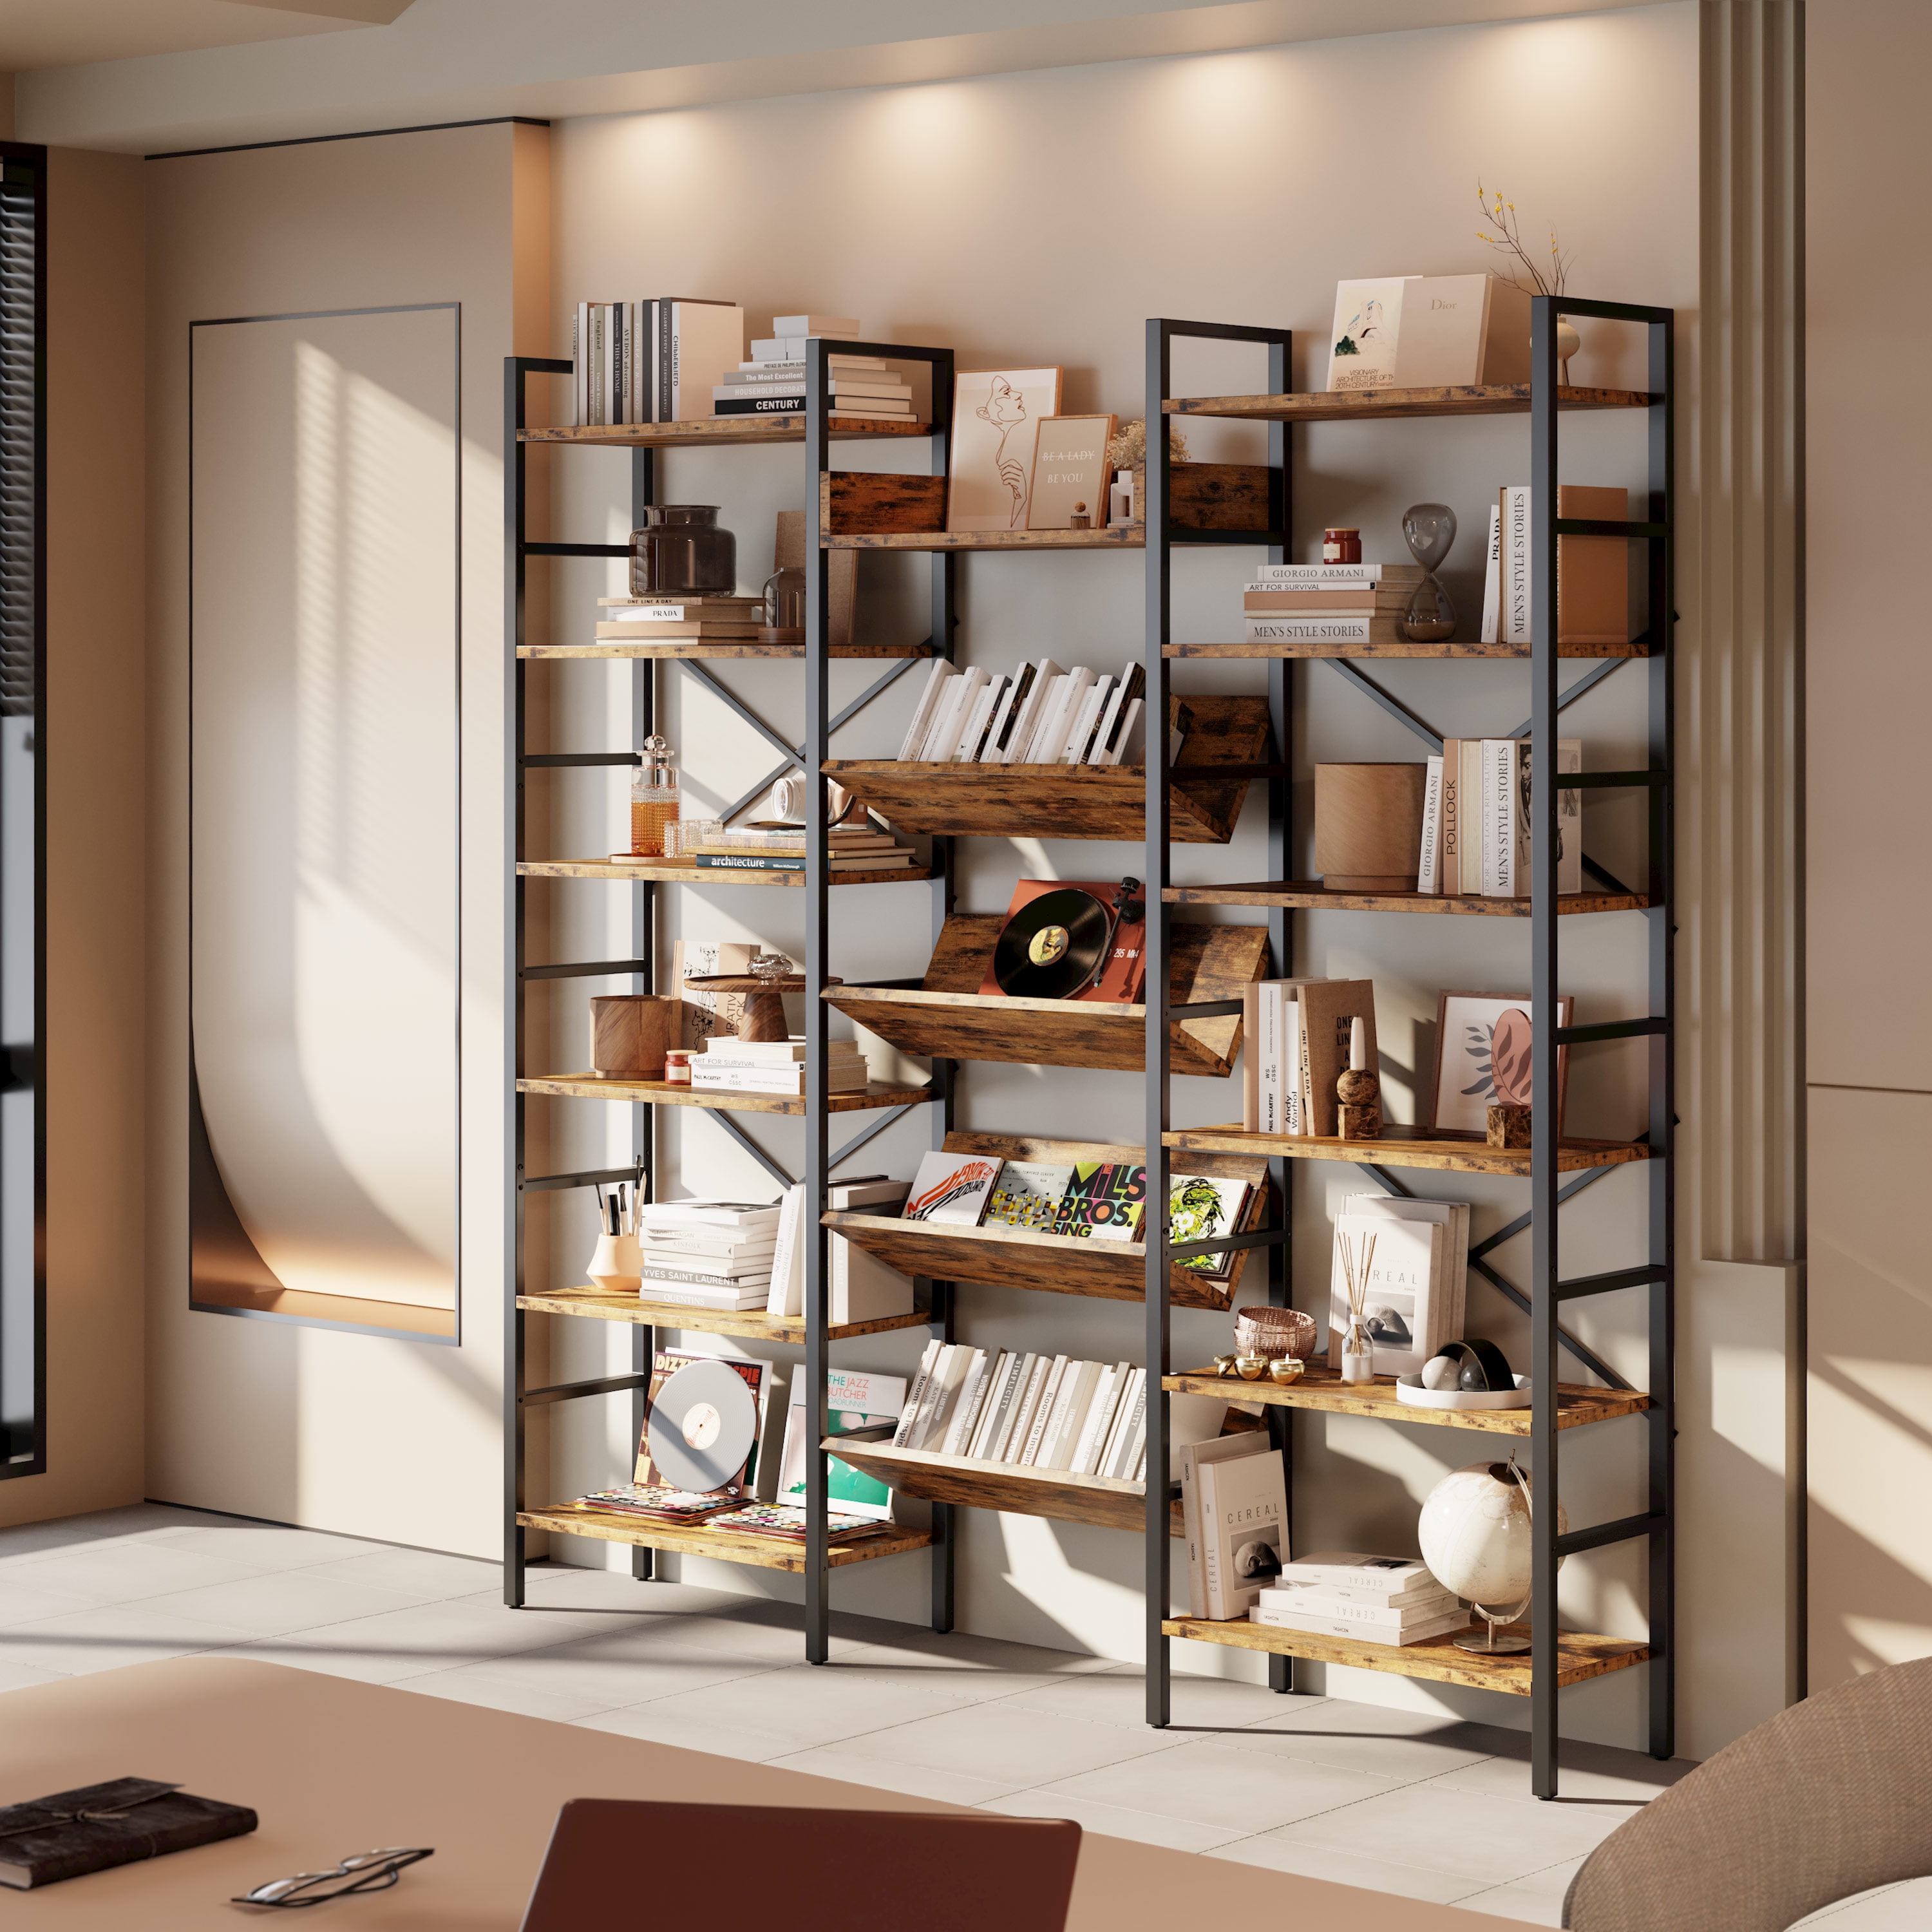 IRONCK Bookshelves and Bookcases 6-Shelf Etagere Bookcase